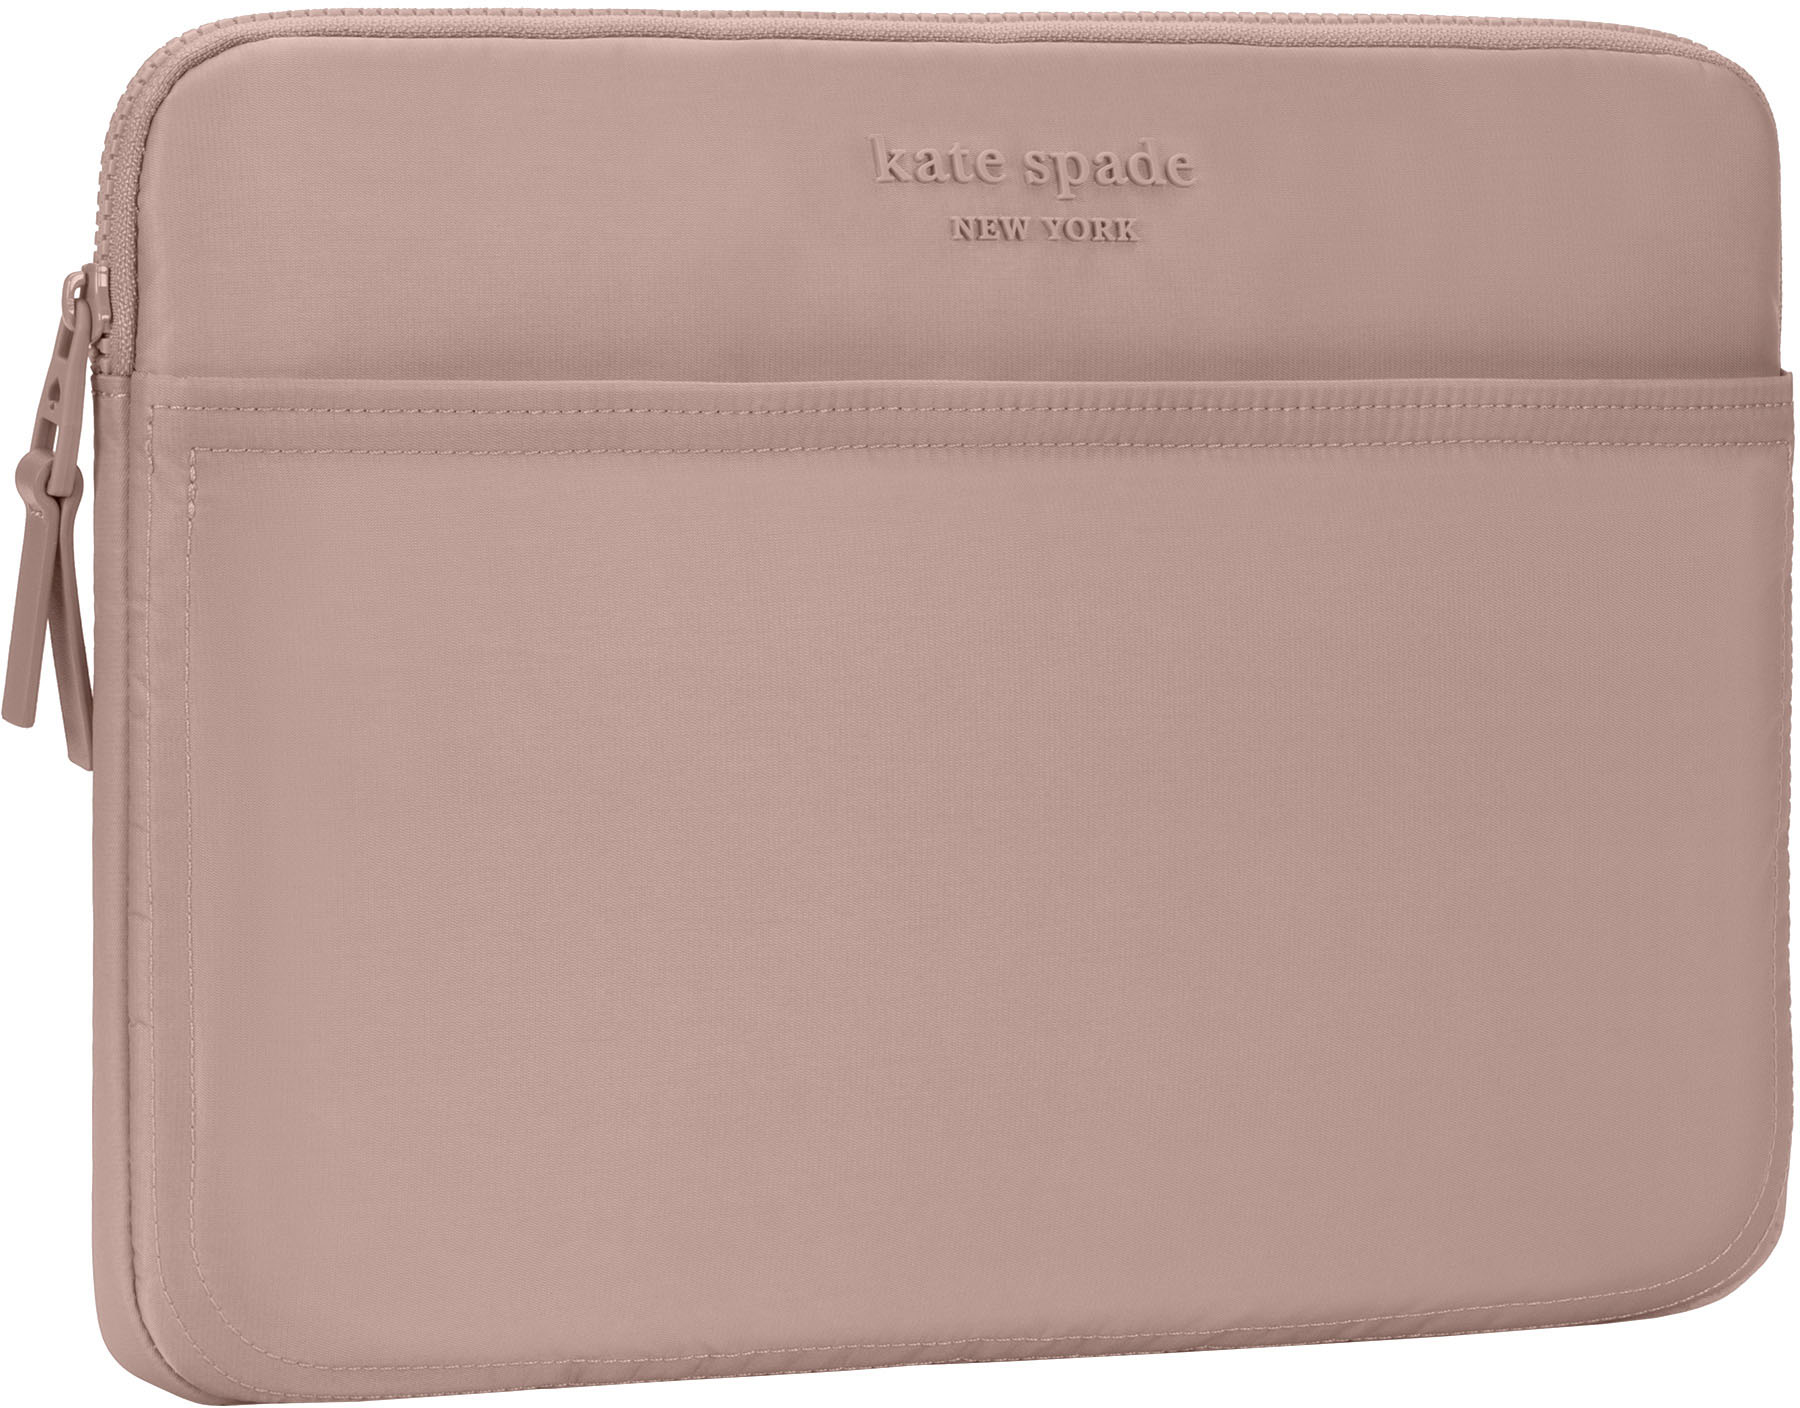 kate spade new york Laptop Sleeve 13-14 Pink KSMB-024-MADR - Best Buy